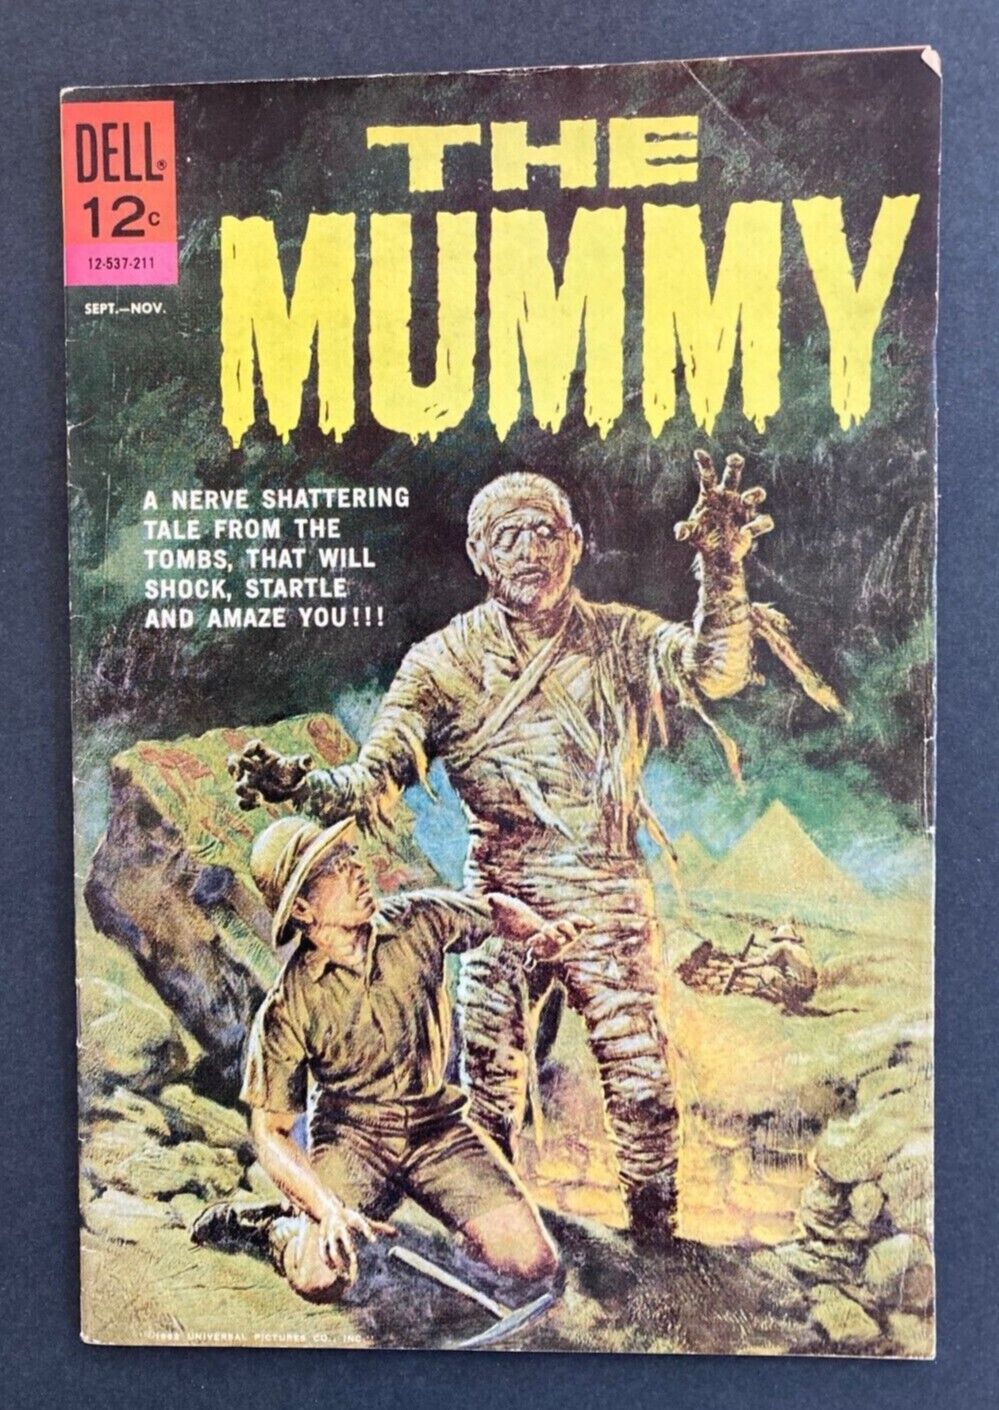 Vintage Dell Comic, The Mummy, Sept-Nov 1962, 12-537-211, Horror Movie Classic